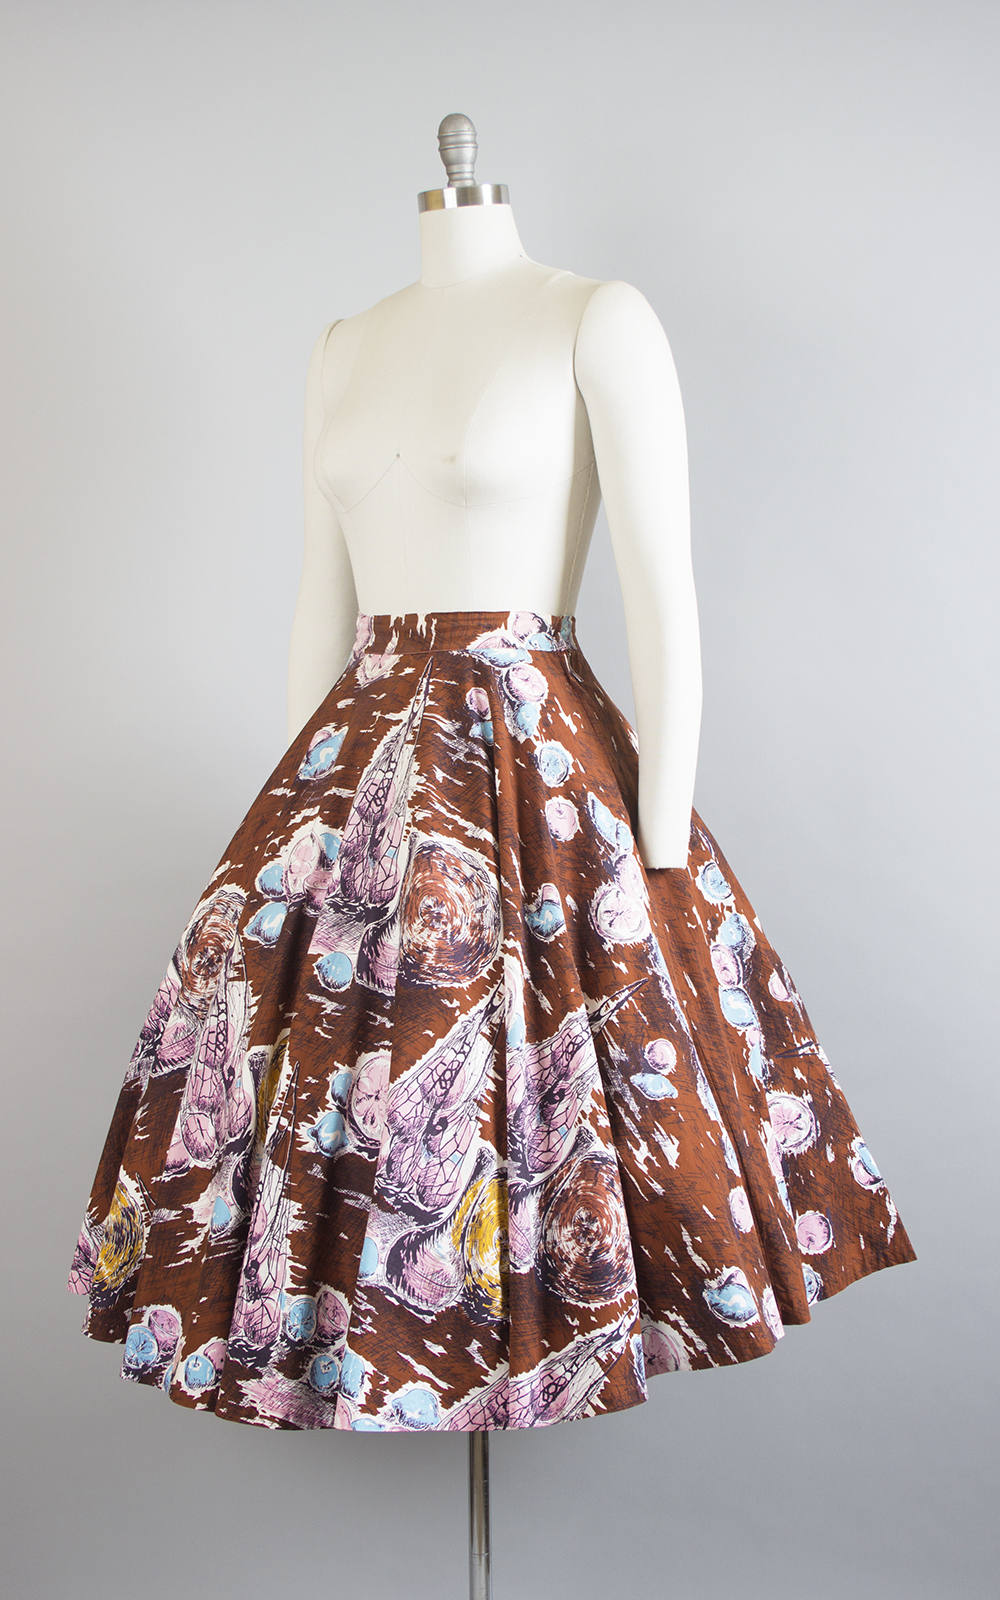 Vintage 1950s Circle Skirt | 50s Mediterranean Novelty Print Cotton Brown Pink Printed Full Swing Skirt (medium)